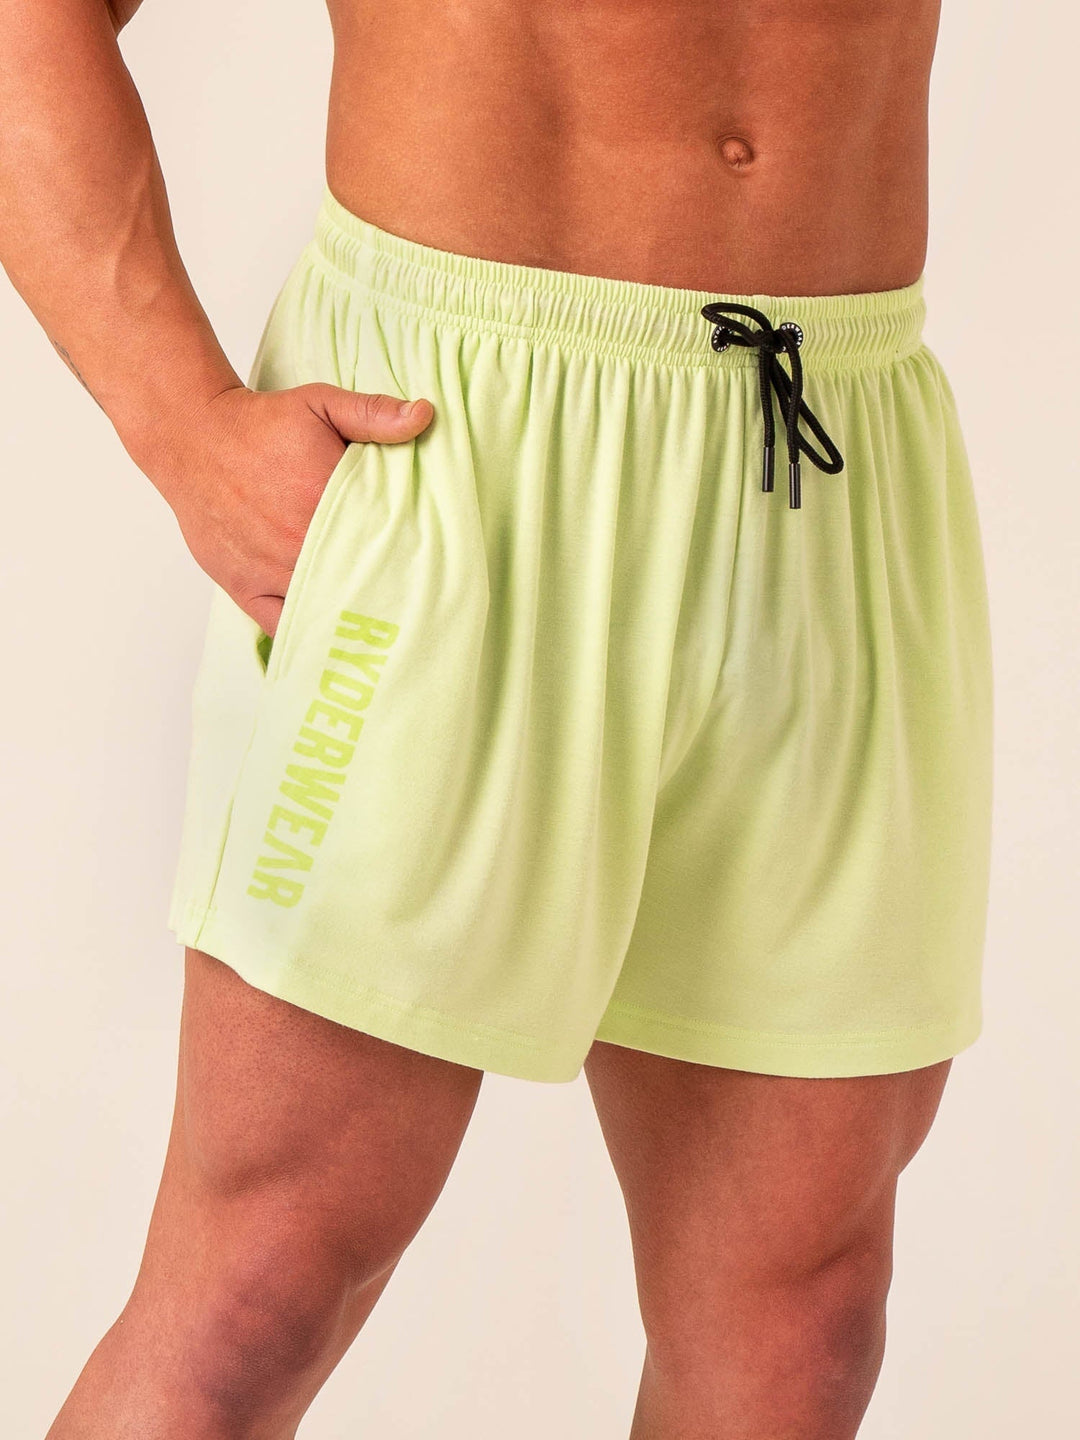 Arnie Shorts - Lime Clothing Ryderwear 